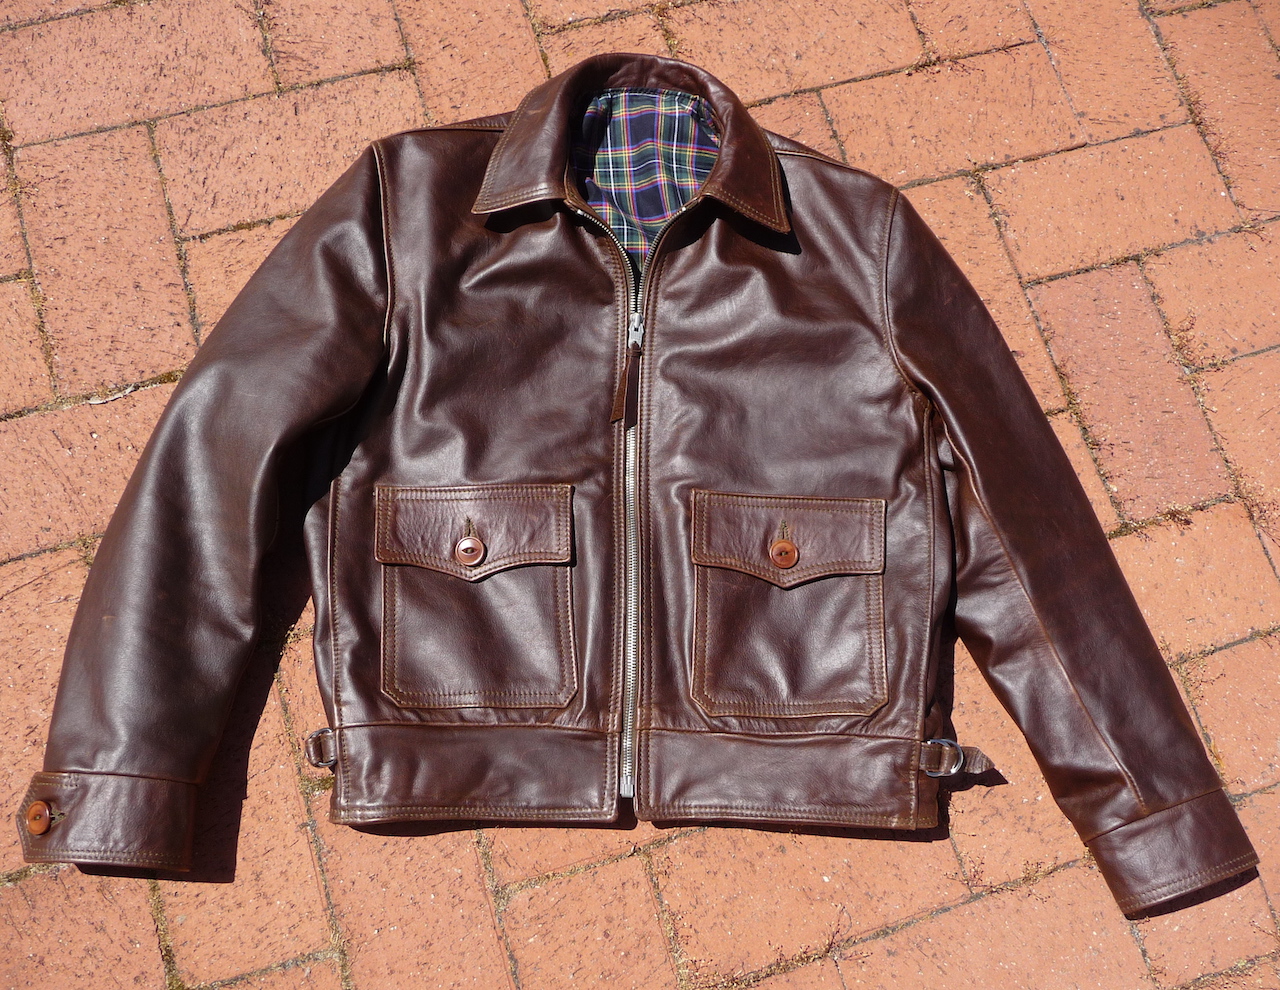 My new aero royale | Vintage Leather Jackets Forum